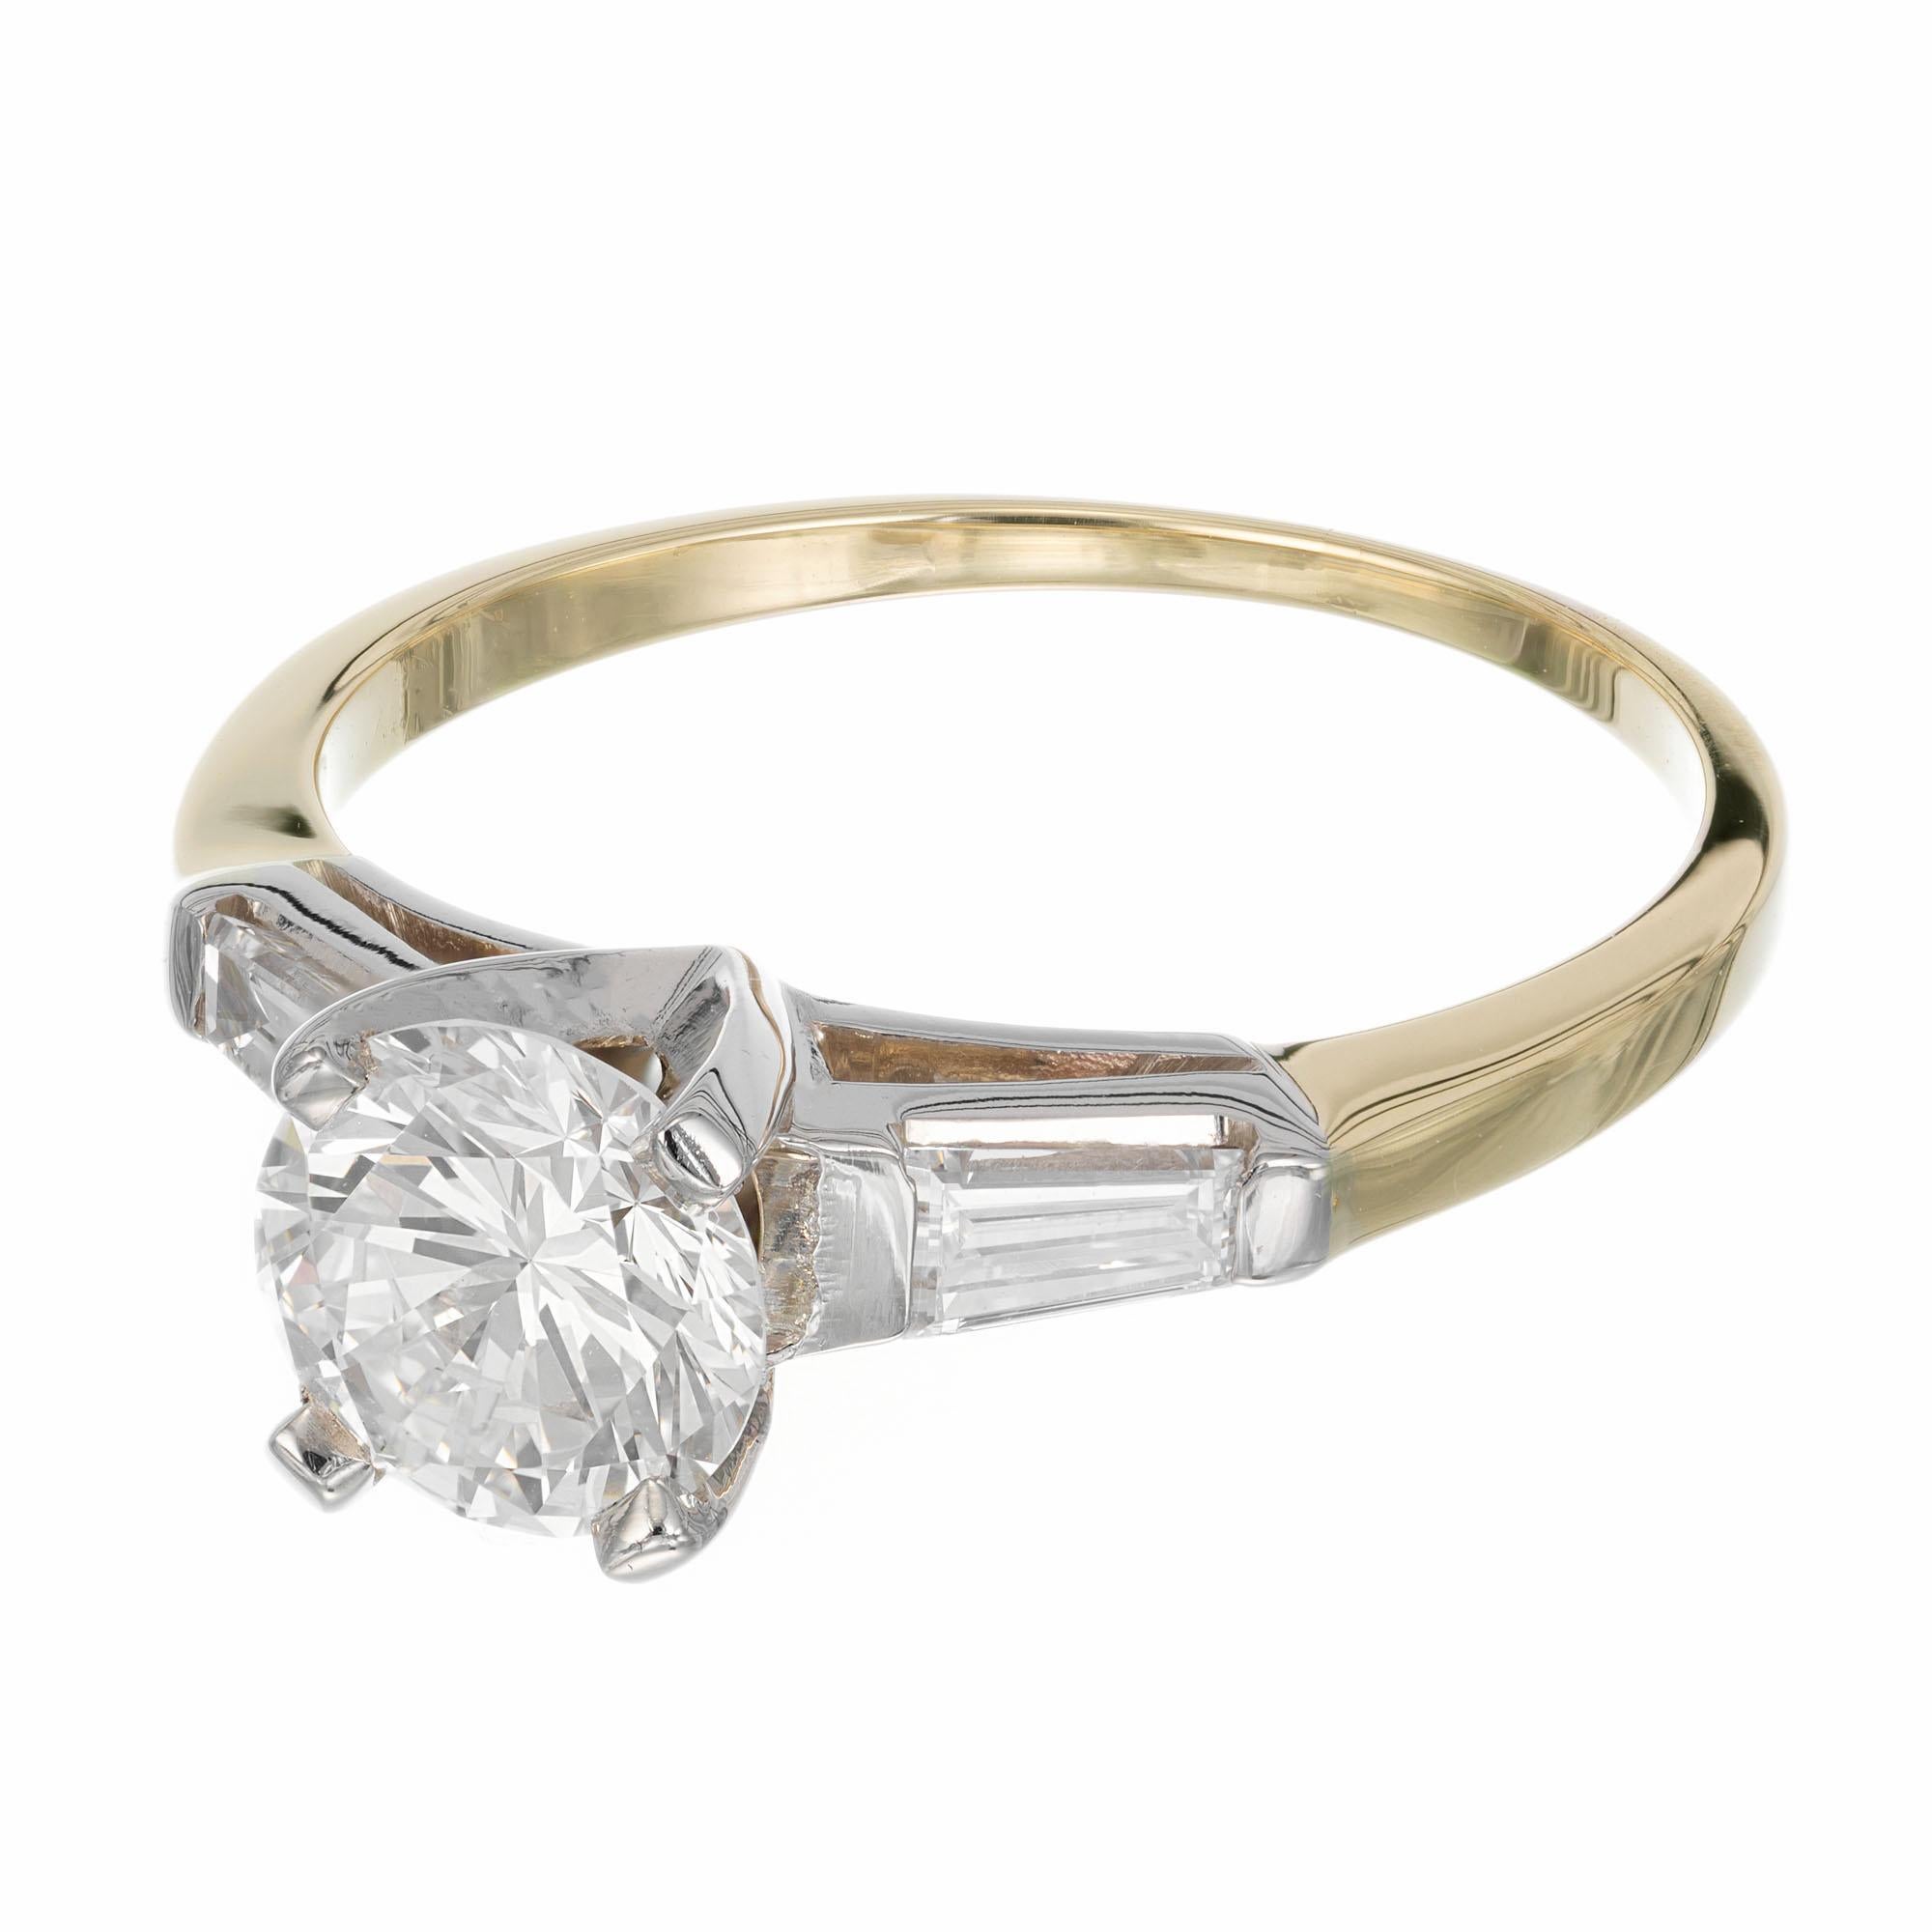 90 carat diamond ring